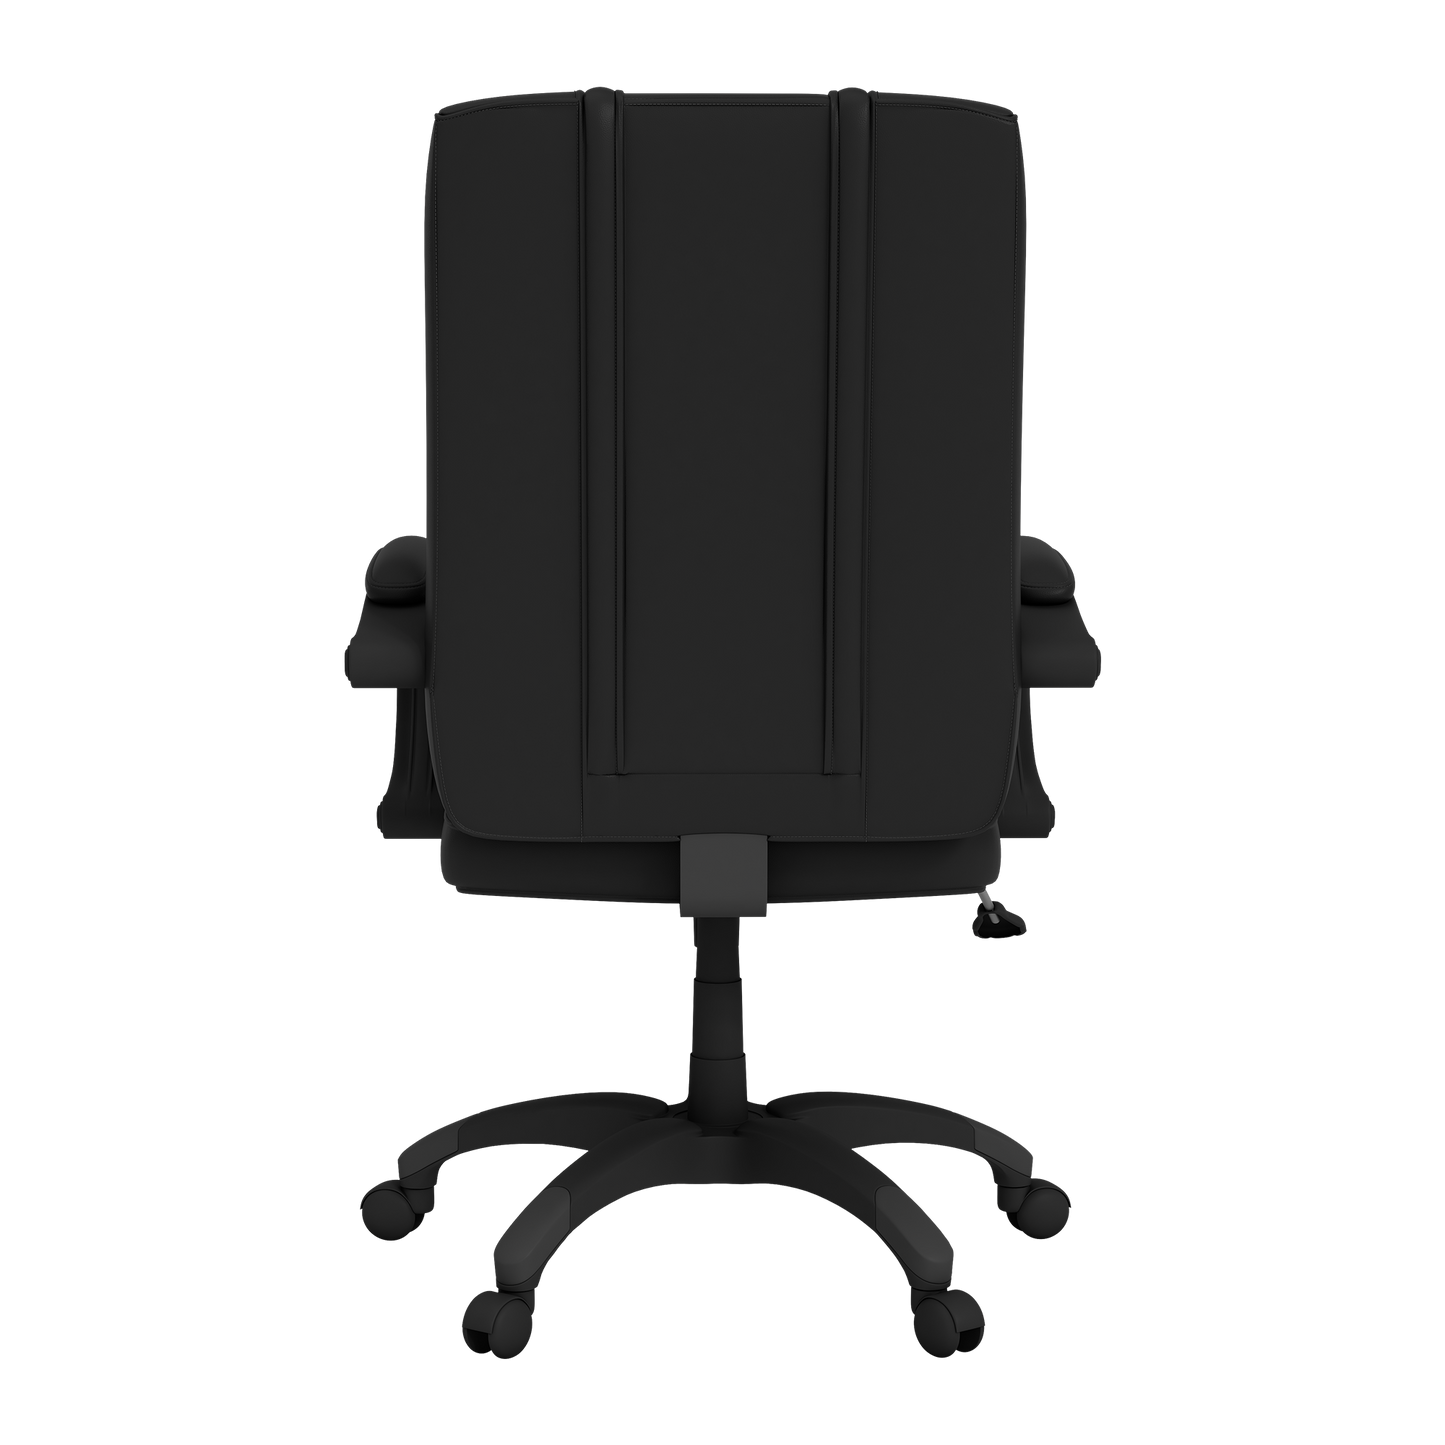 Office Chair 1000 with  New York Giants Helmet Logo